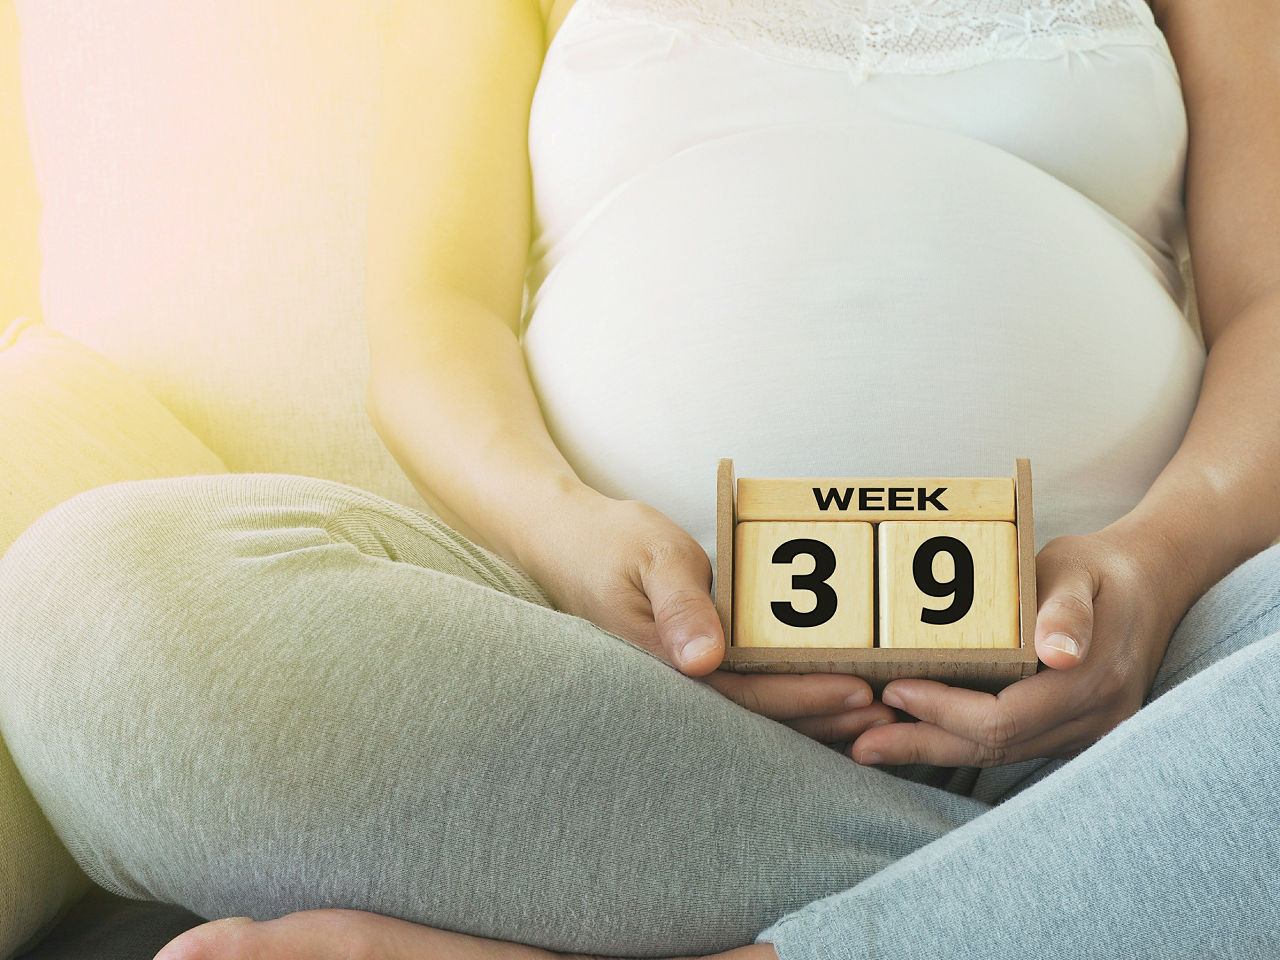 Pregnancy development calendar